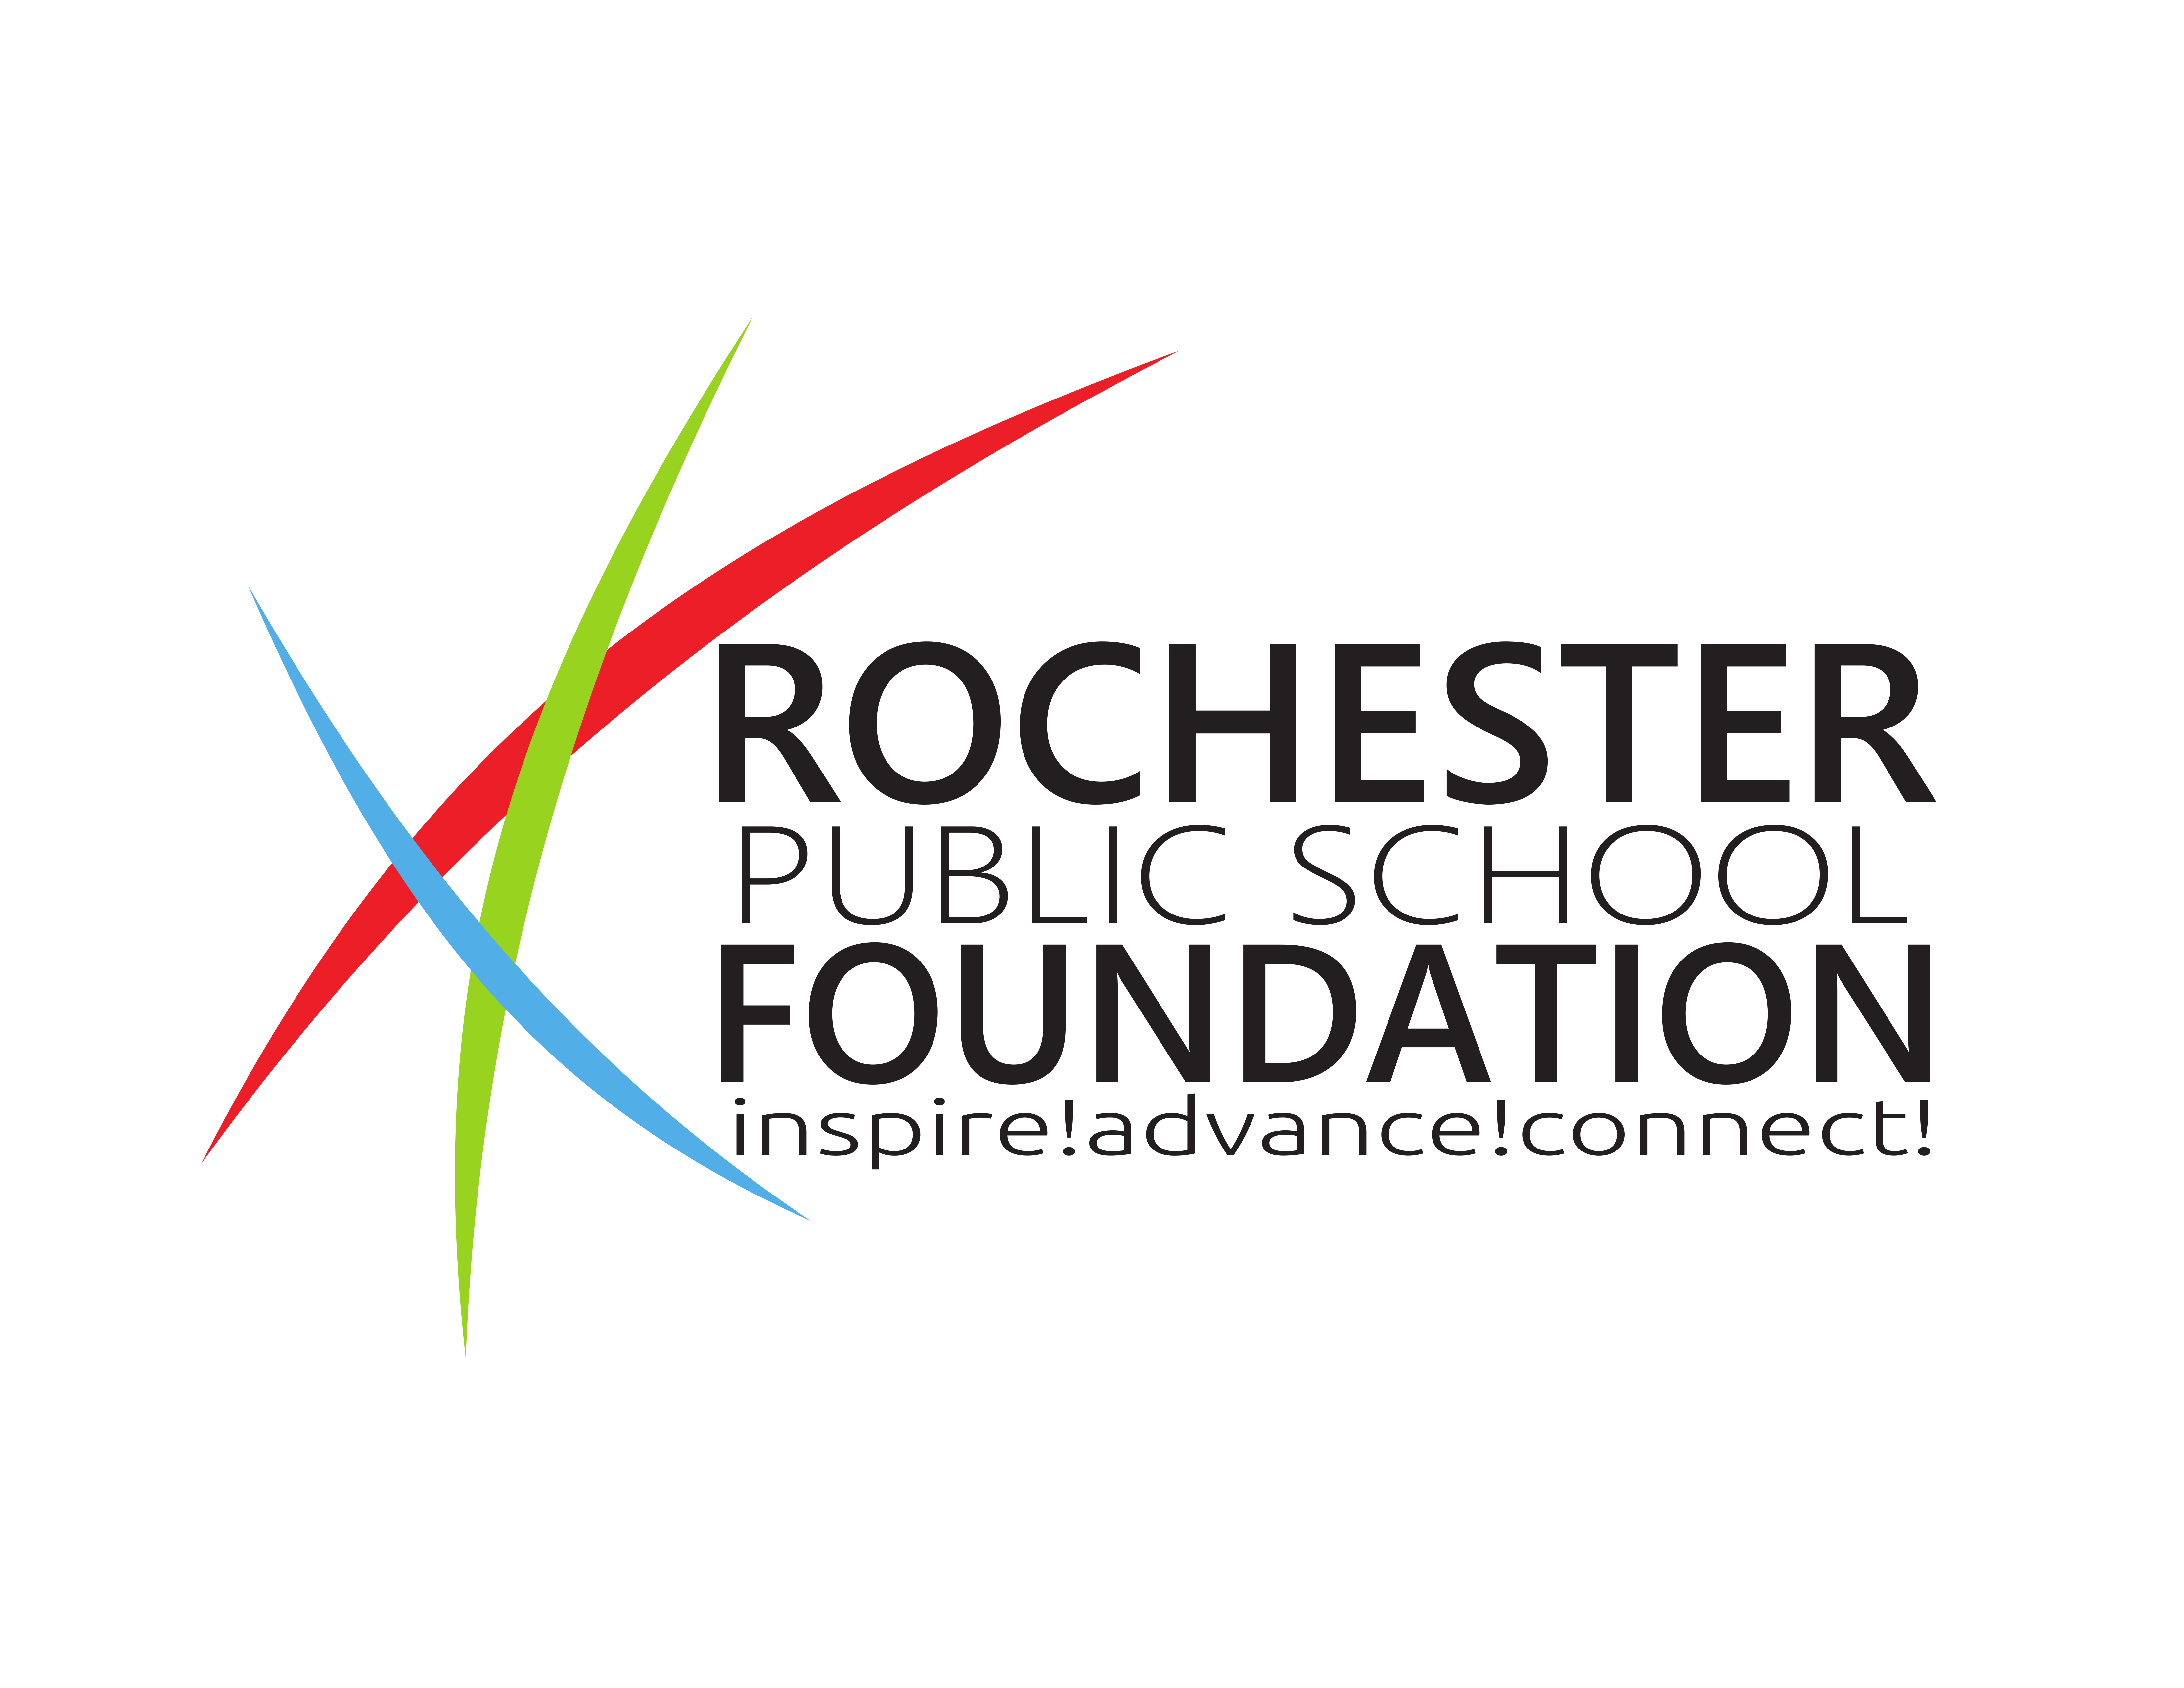 Rochester Public School Foundation, inspire! advance! connect!